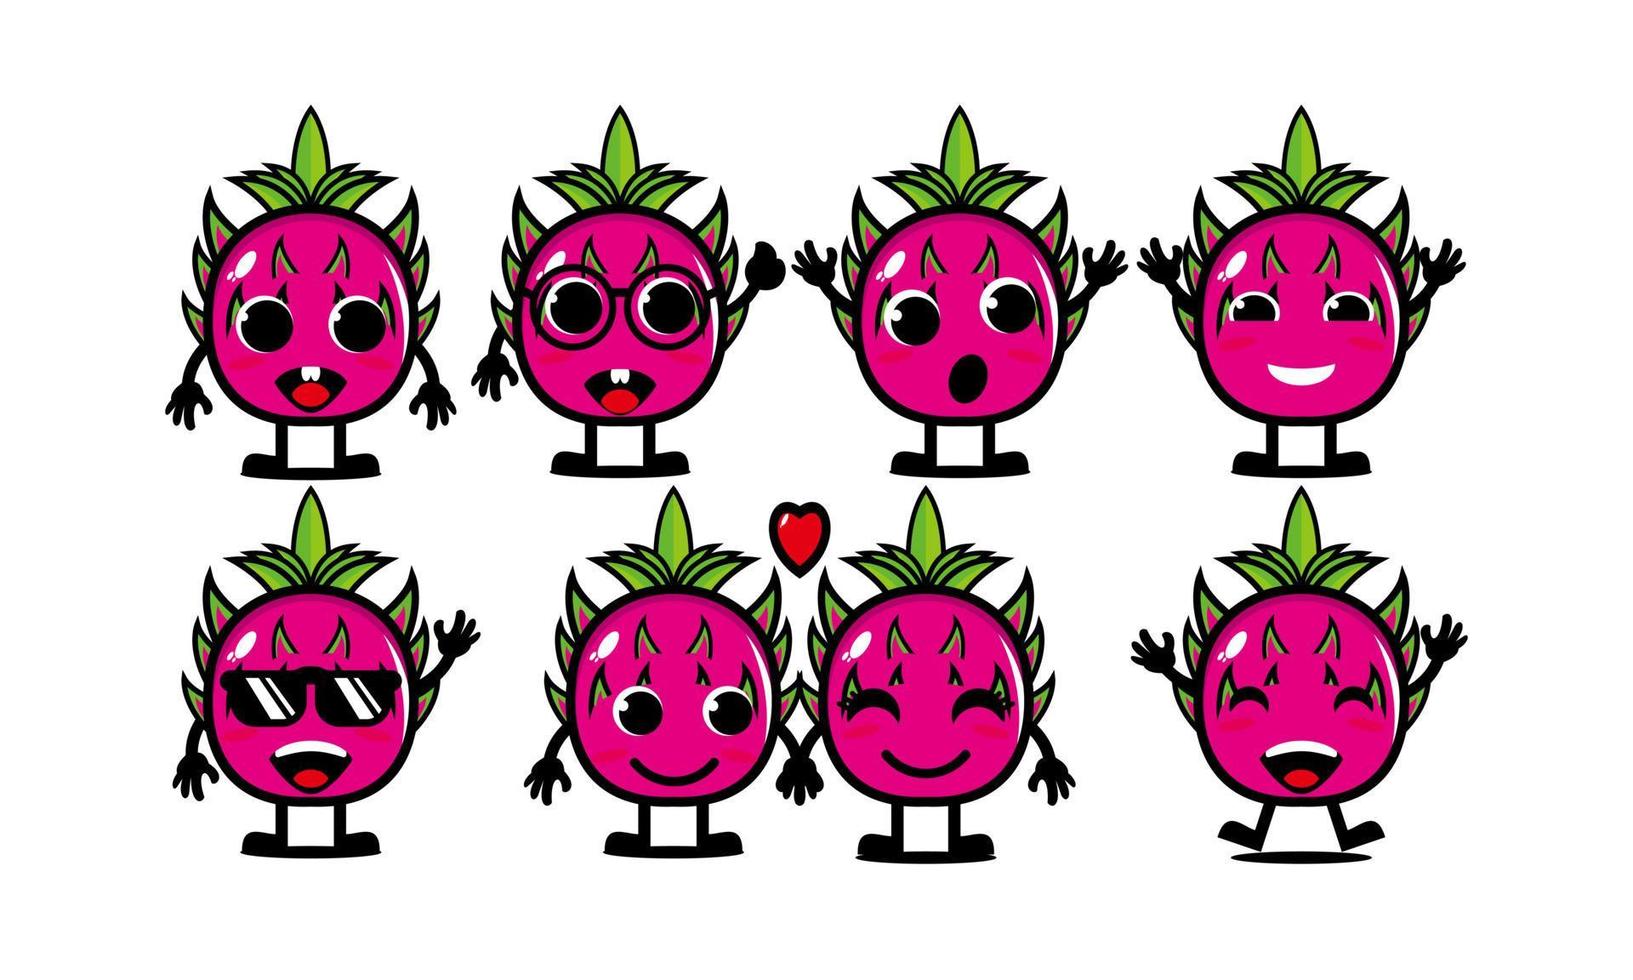 lindo sonriente divertido dragon fruit set collection.vector caricatura plana cara personaje mascota ilustración .aislado sobre fondo blanco vector